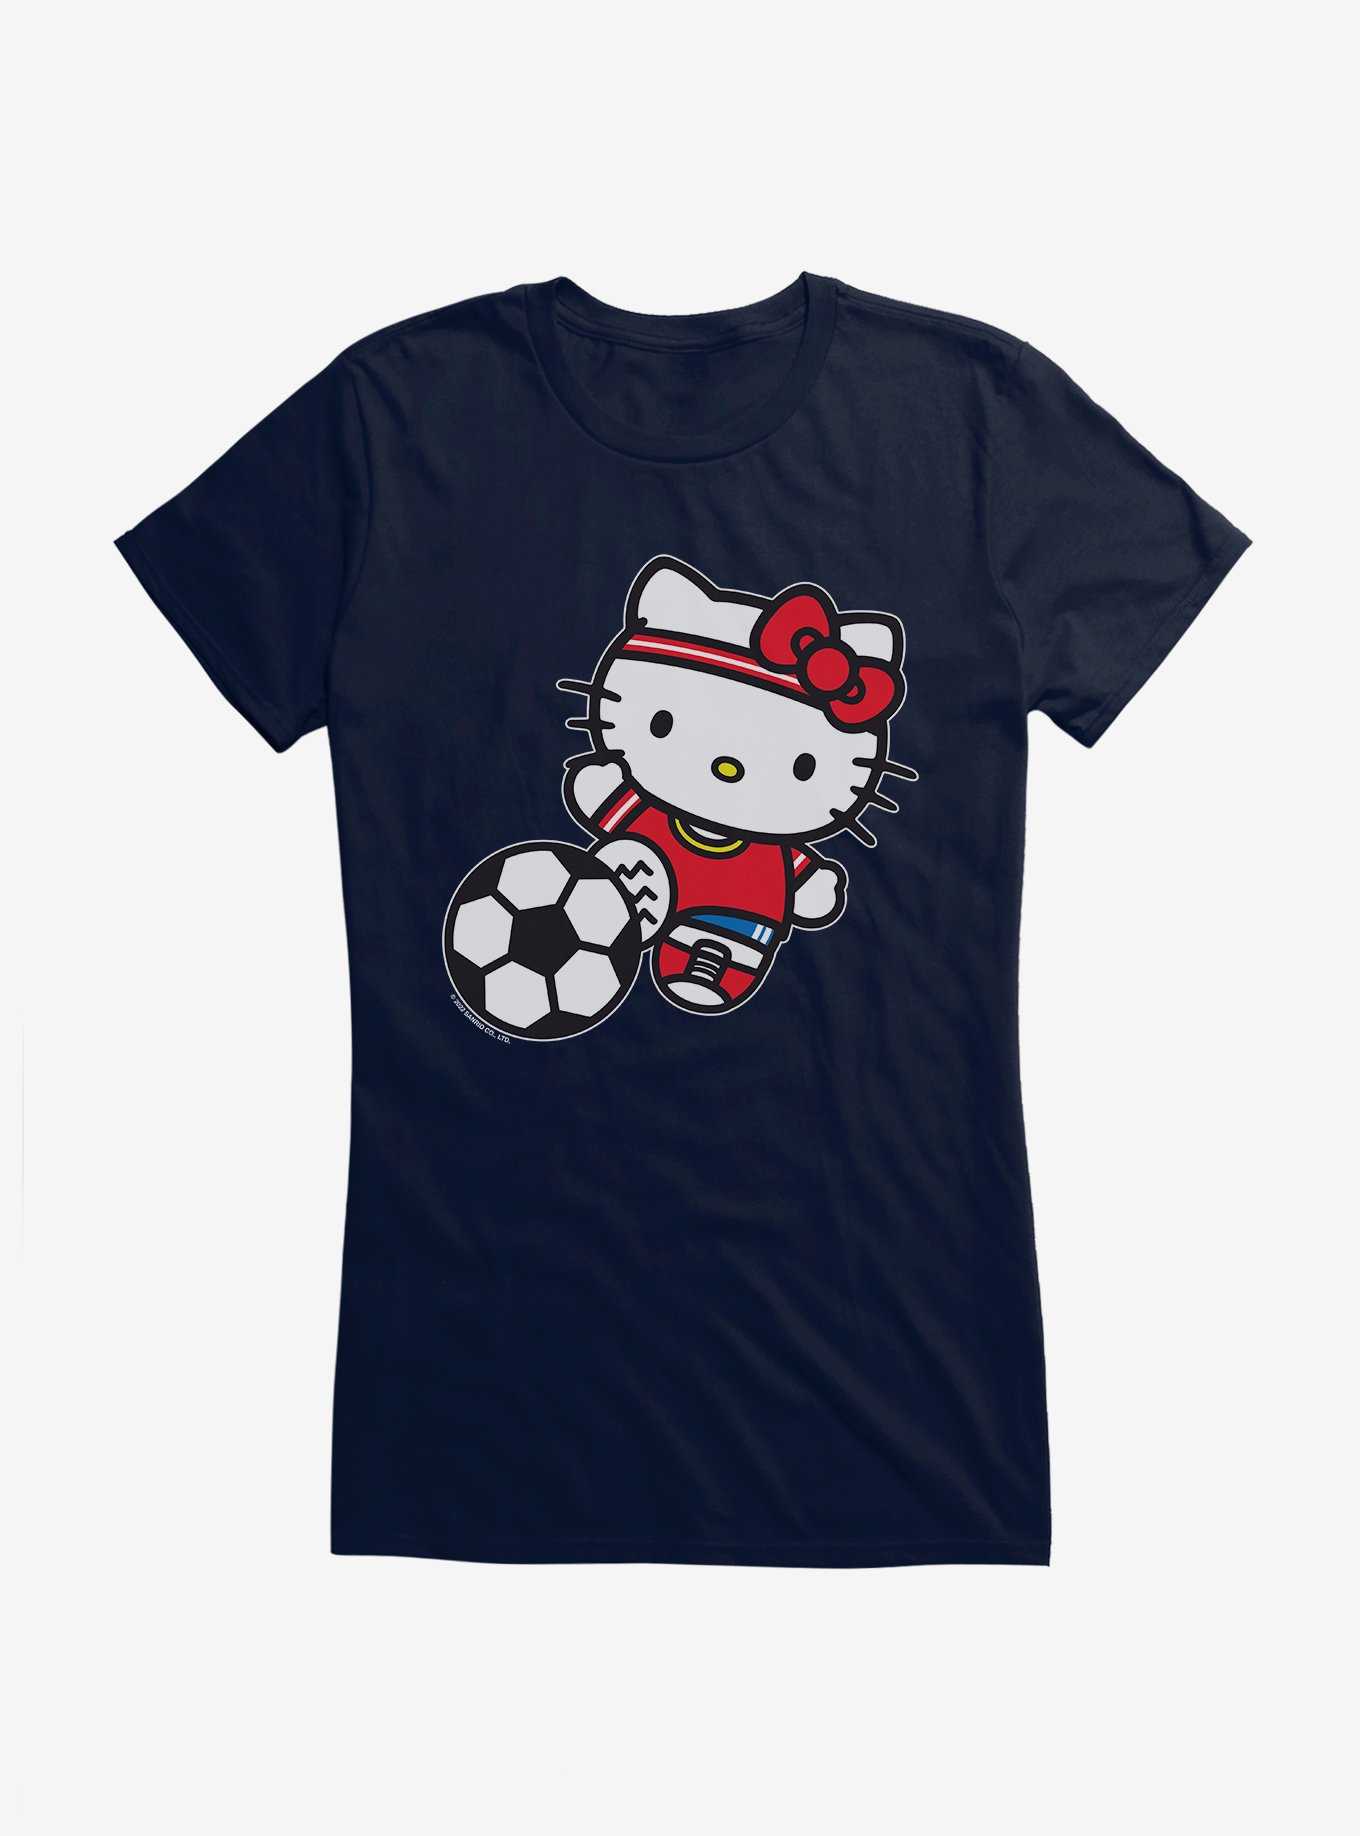 Hello Kitty Soccer Kick Girls T-Shirt, , hi-res